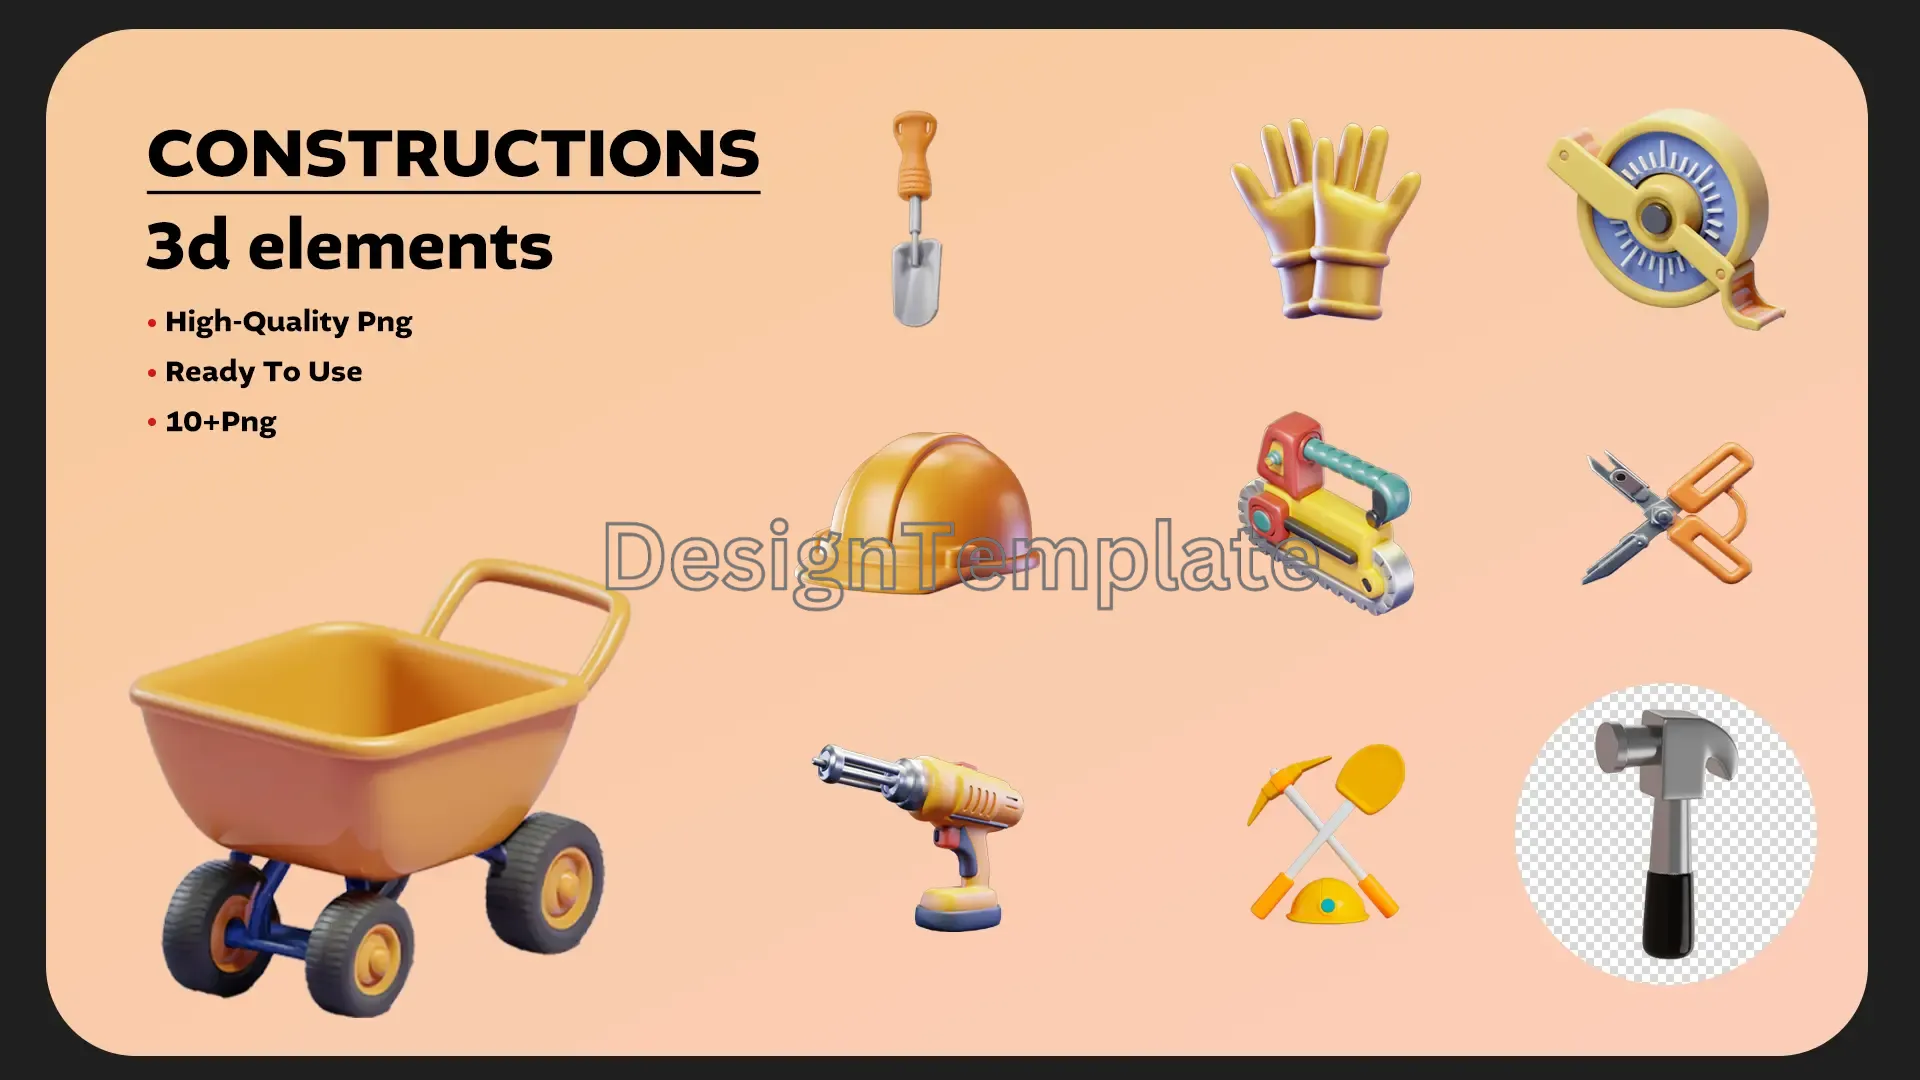 Heavy Duty Exquisite 3D Construction Elements Collection image